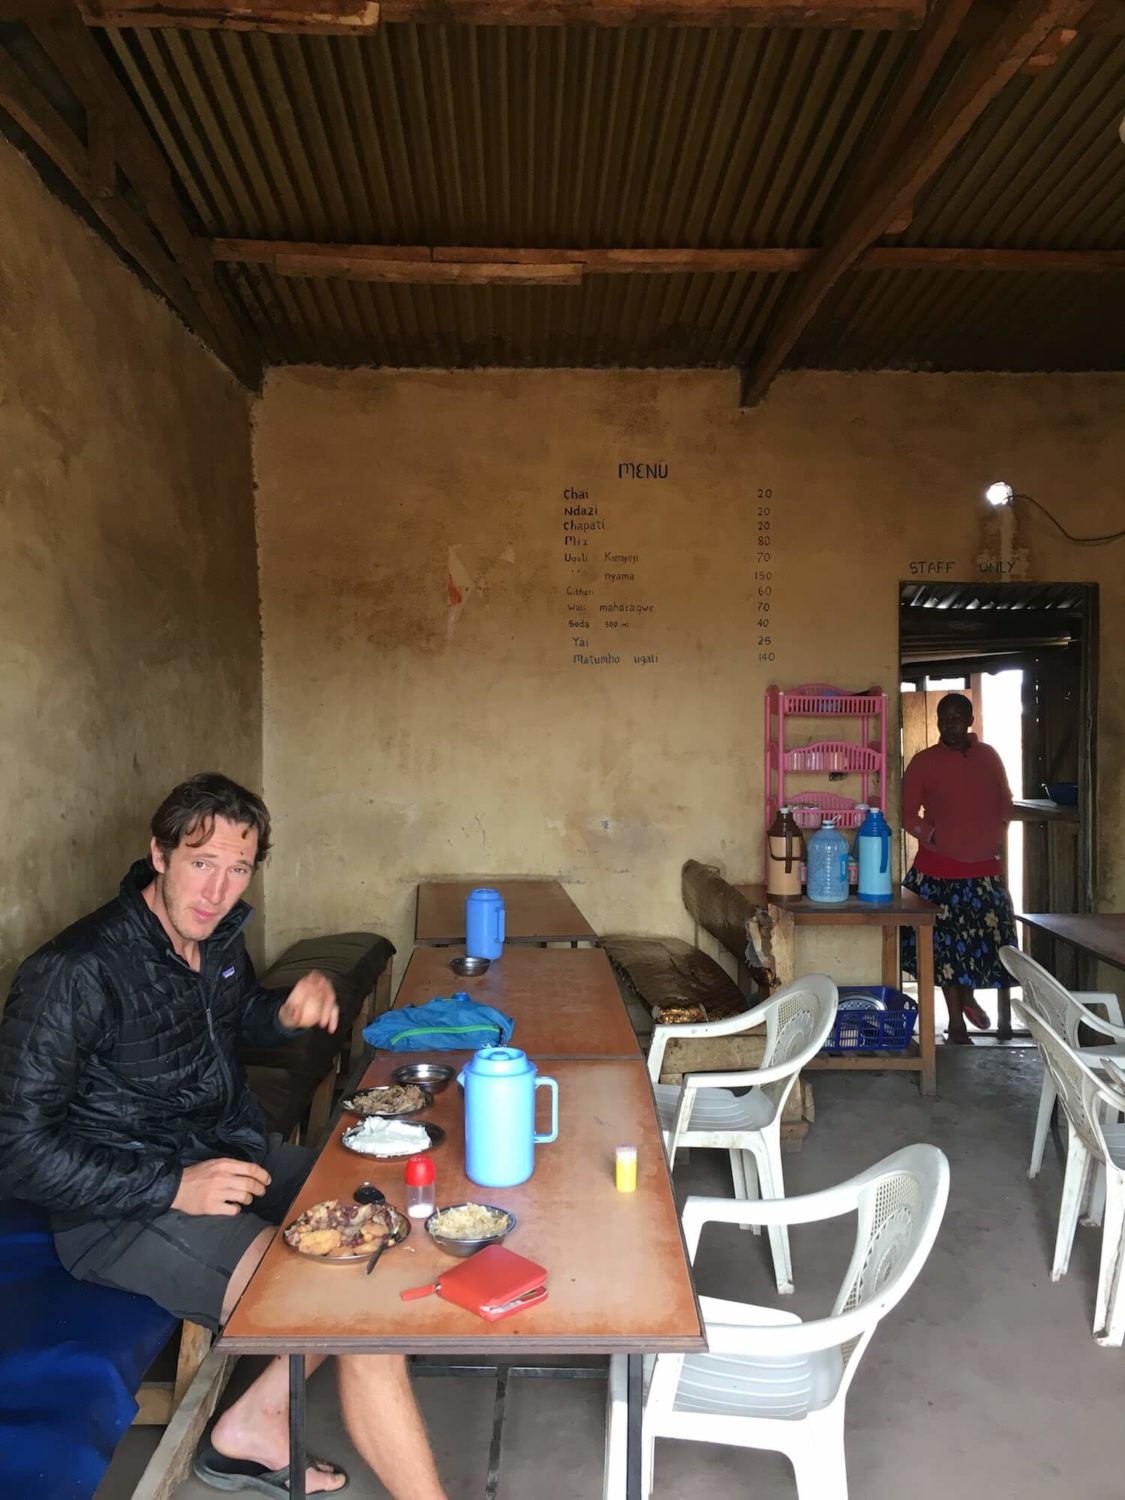 Chris eating a meal in a shack in Kenya